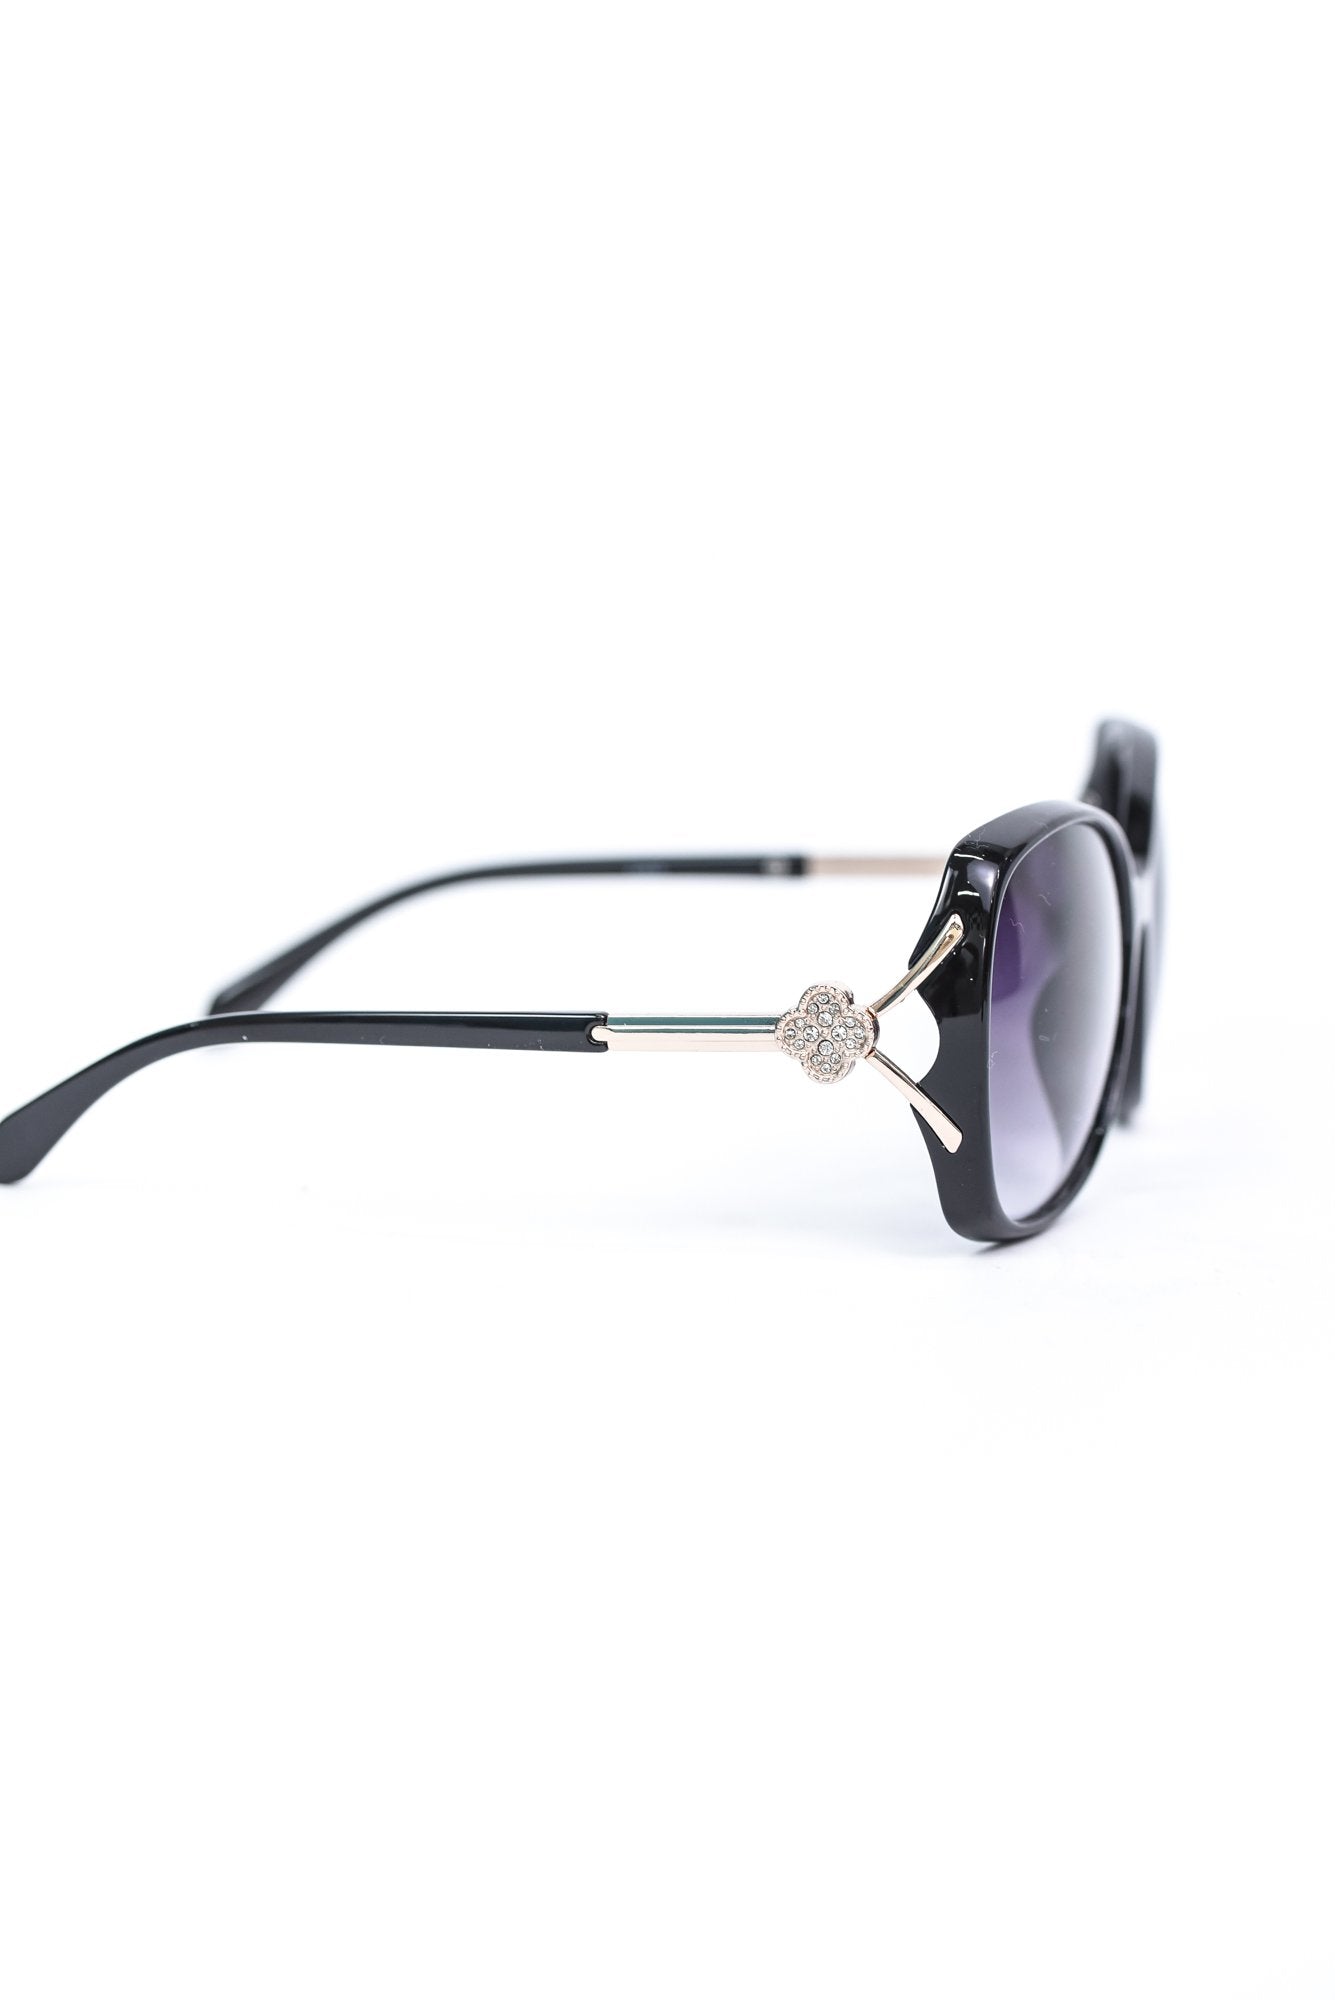 Black Frame/Black Lens Round Sunglasses - SGL279BK - FREE hard case